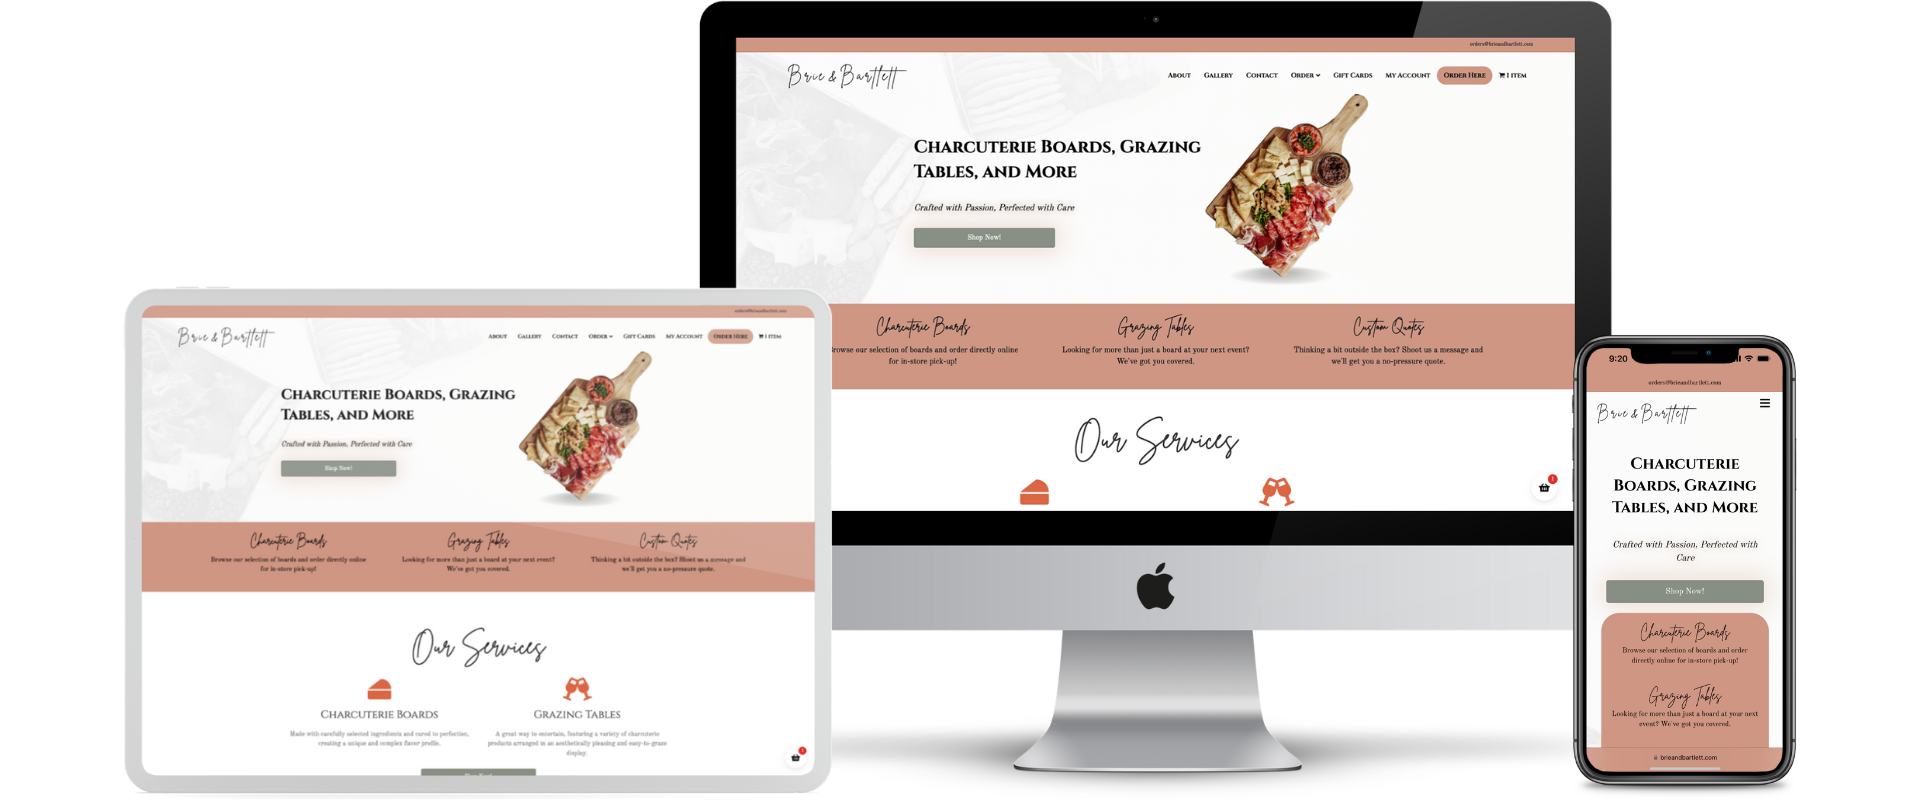 responsive web design: Brie & Bartlett